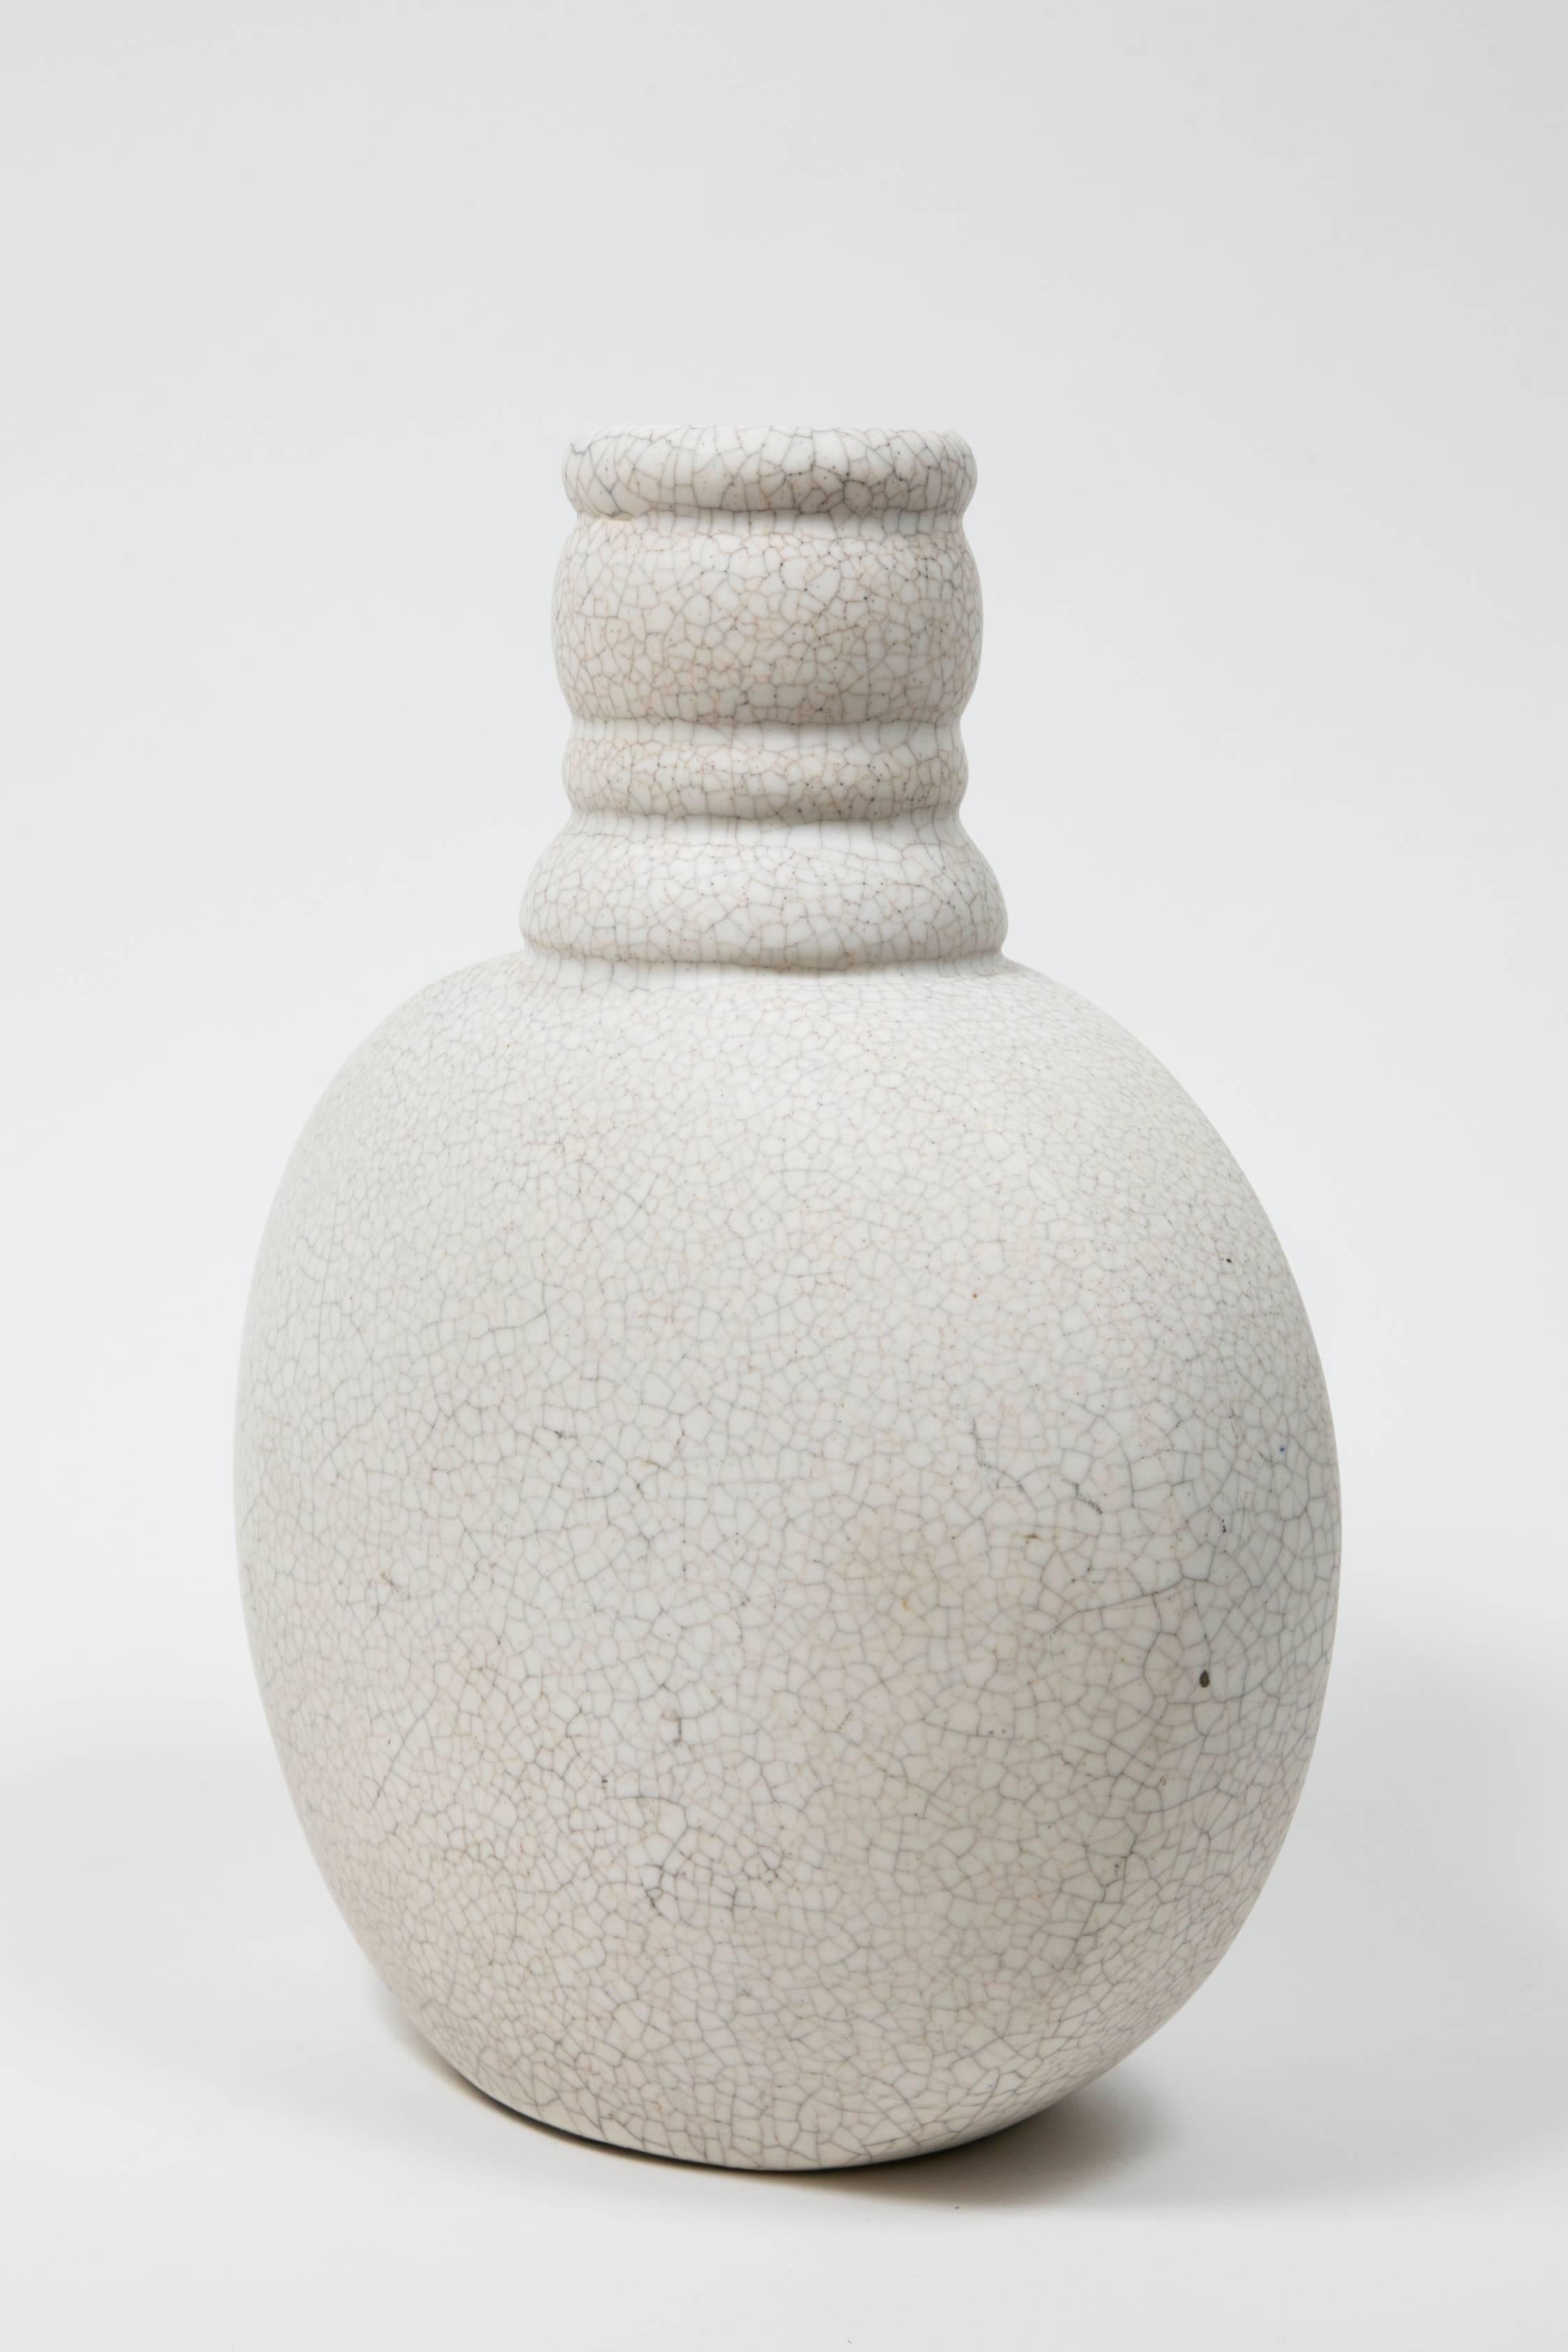 French white craquelure vase by Charlotte Chauchet (1878-1964)
for Atelier Primavera au Printemps 
Signed Primavera, France,
Numbered.